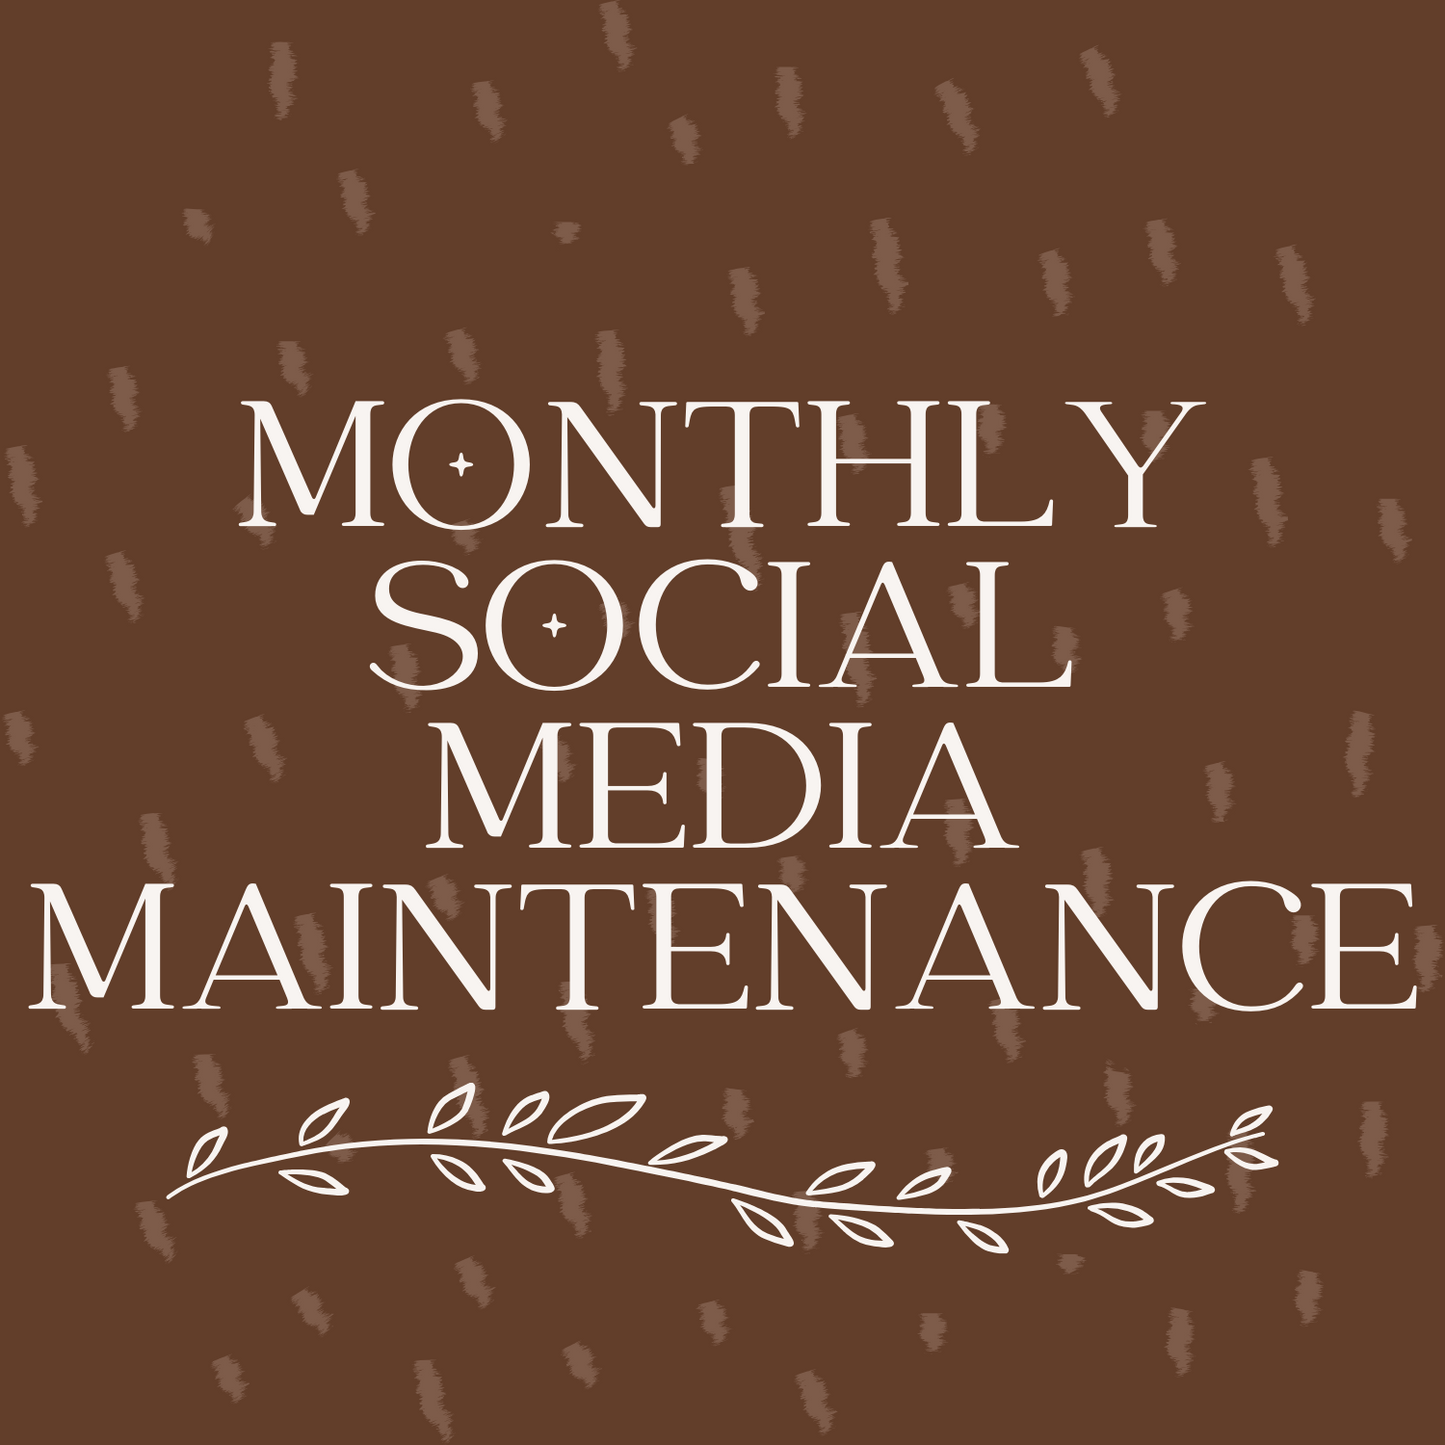 Monthly Social Media Maintenance